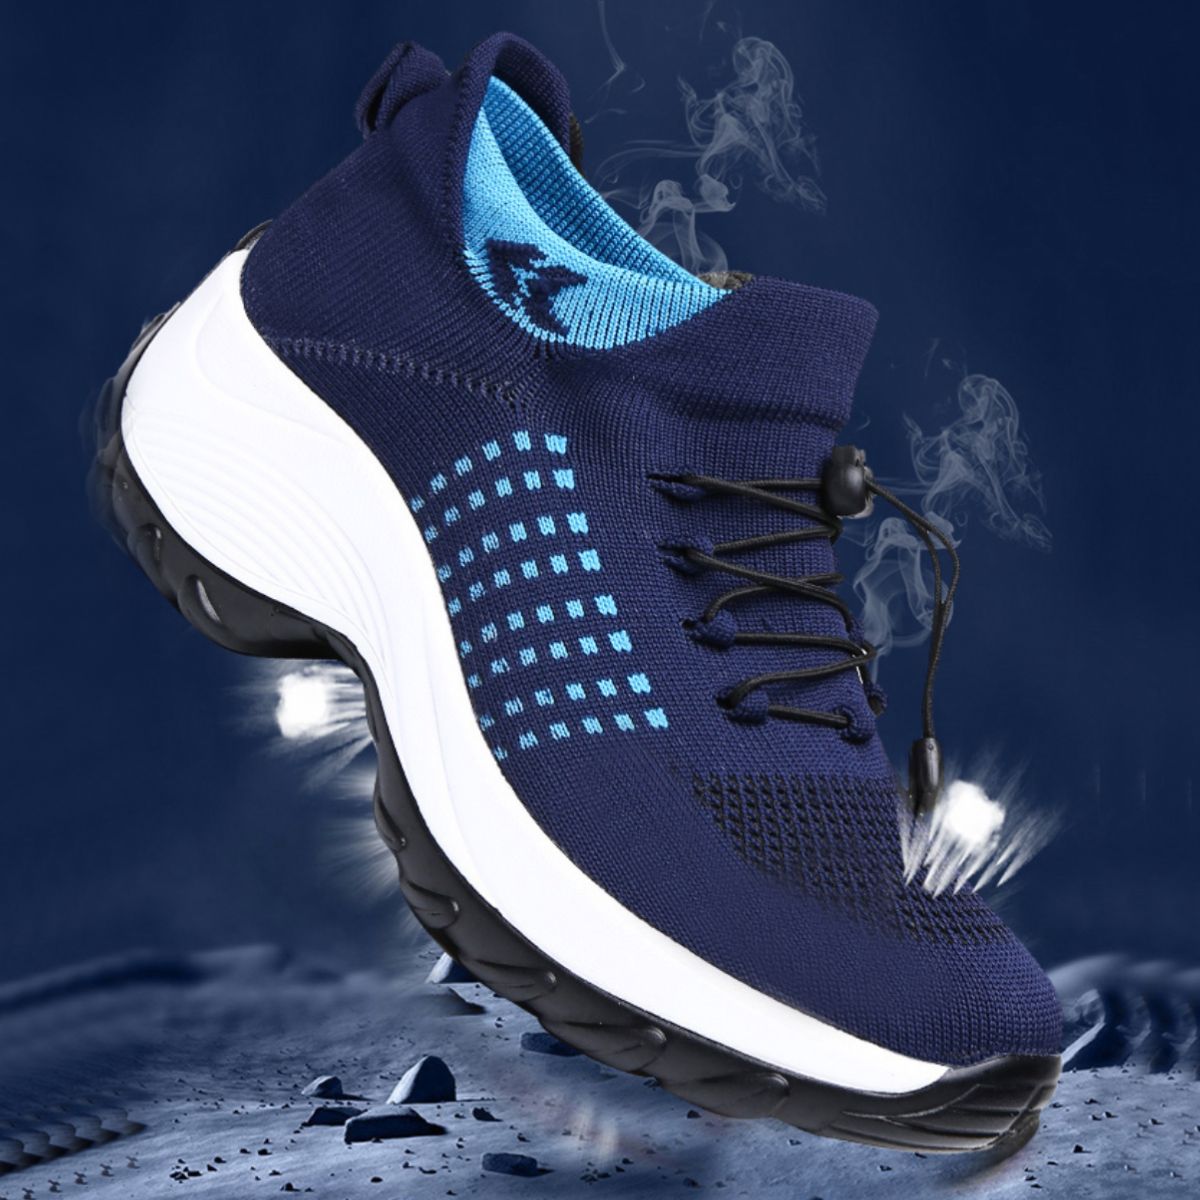 ComforthoFit Cloud Pro – Innovative Pain Relief Footwear